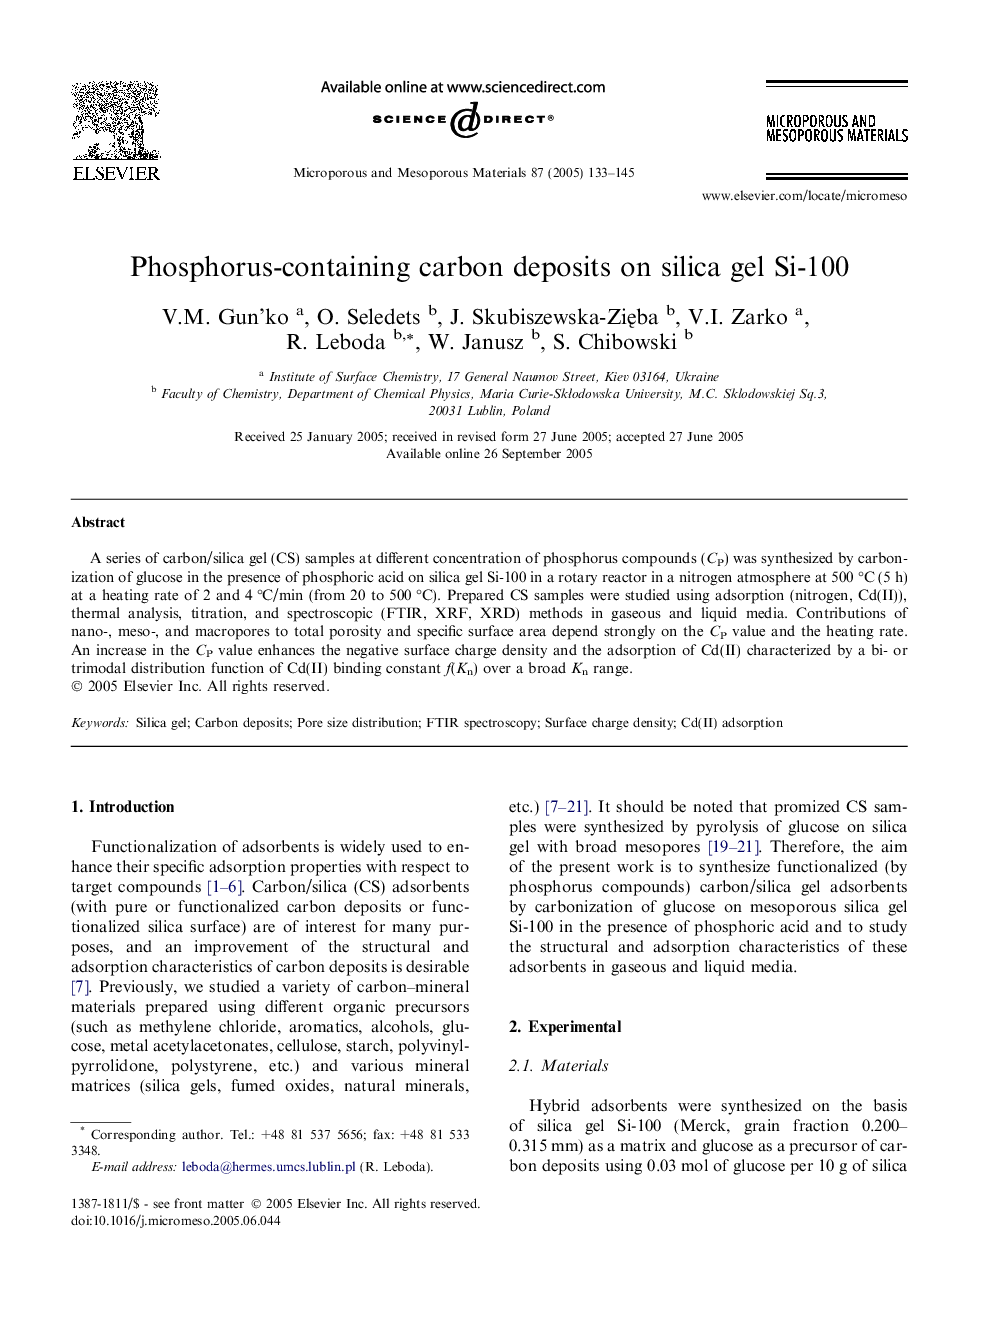 Phosphorus-containing carbon deposits on silica gel Si-100